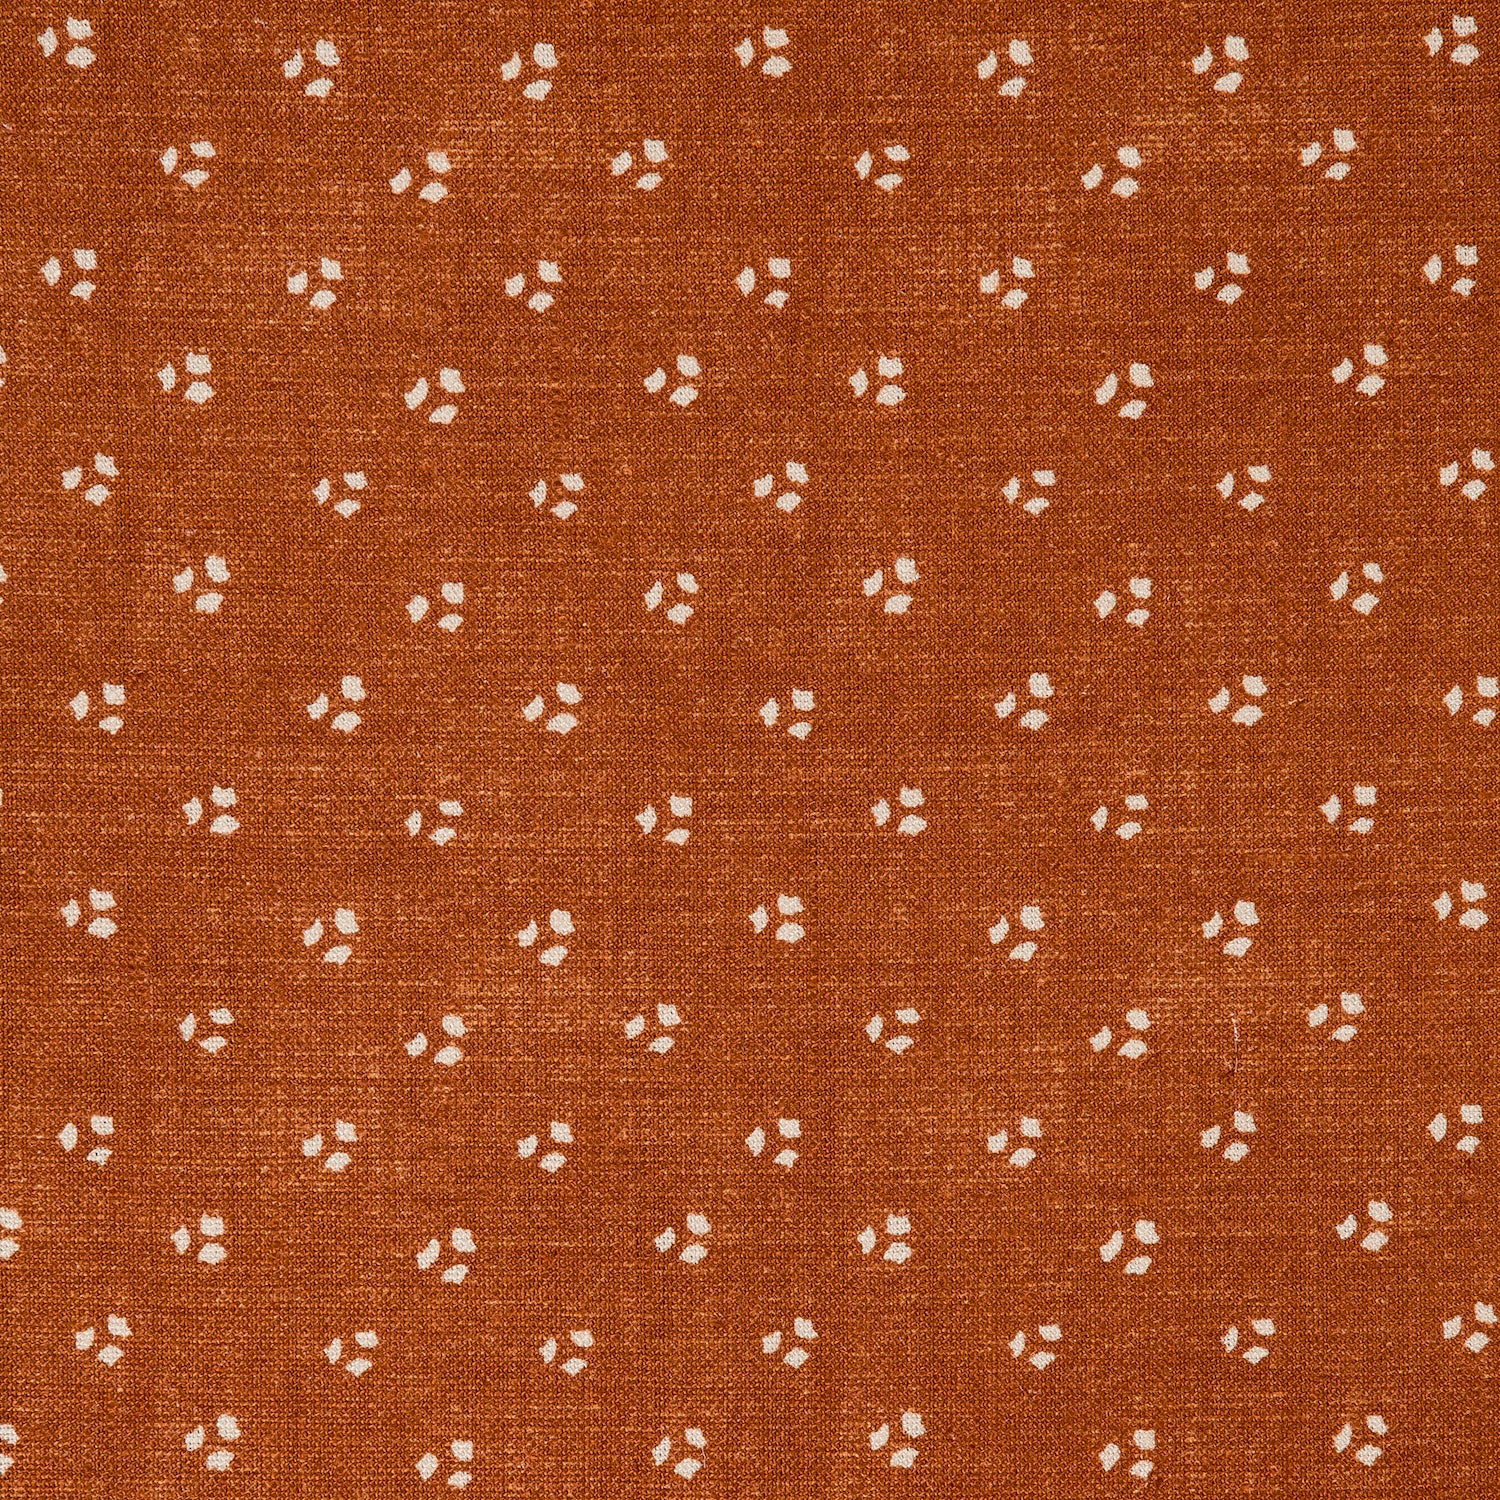 Detail of a linen fabric in a clustered dot pattern in beige on a burnt orange field.